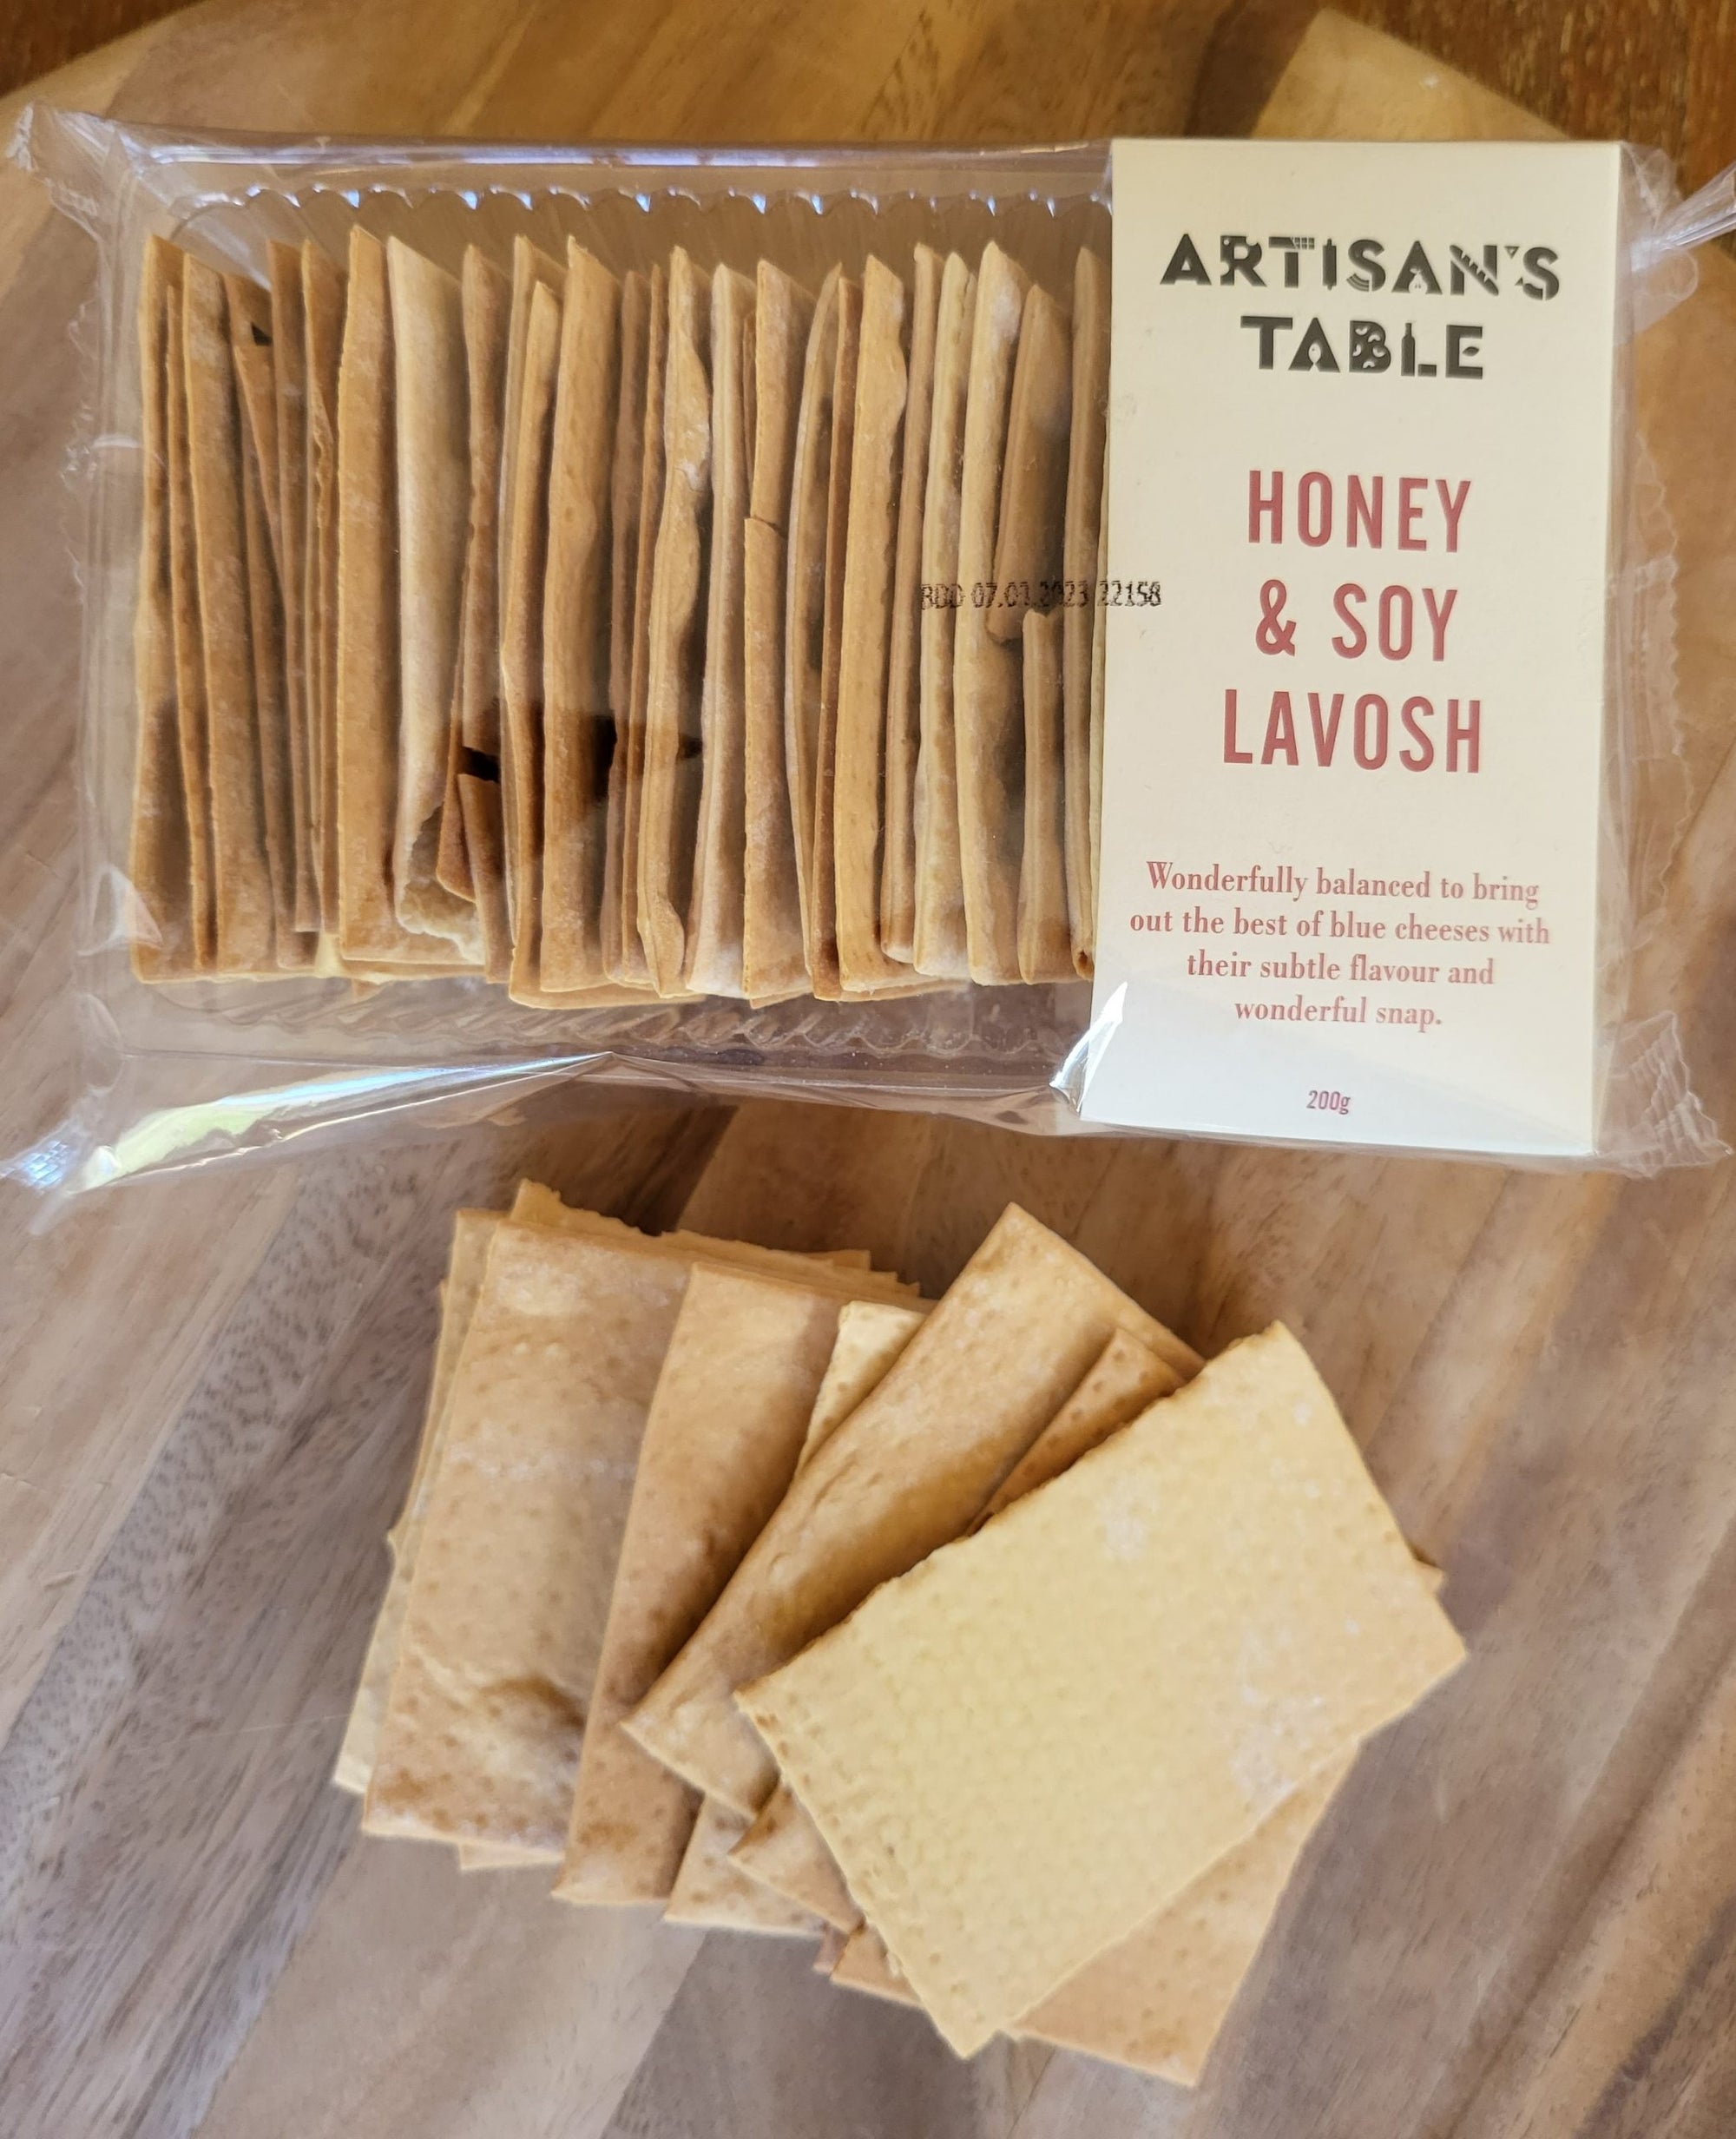 Artisan's table Honey & Soy Lavosh